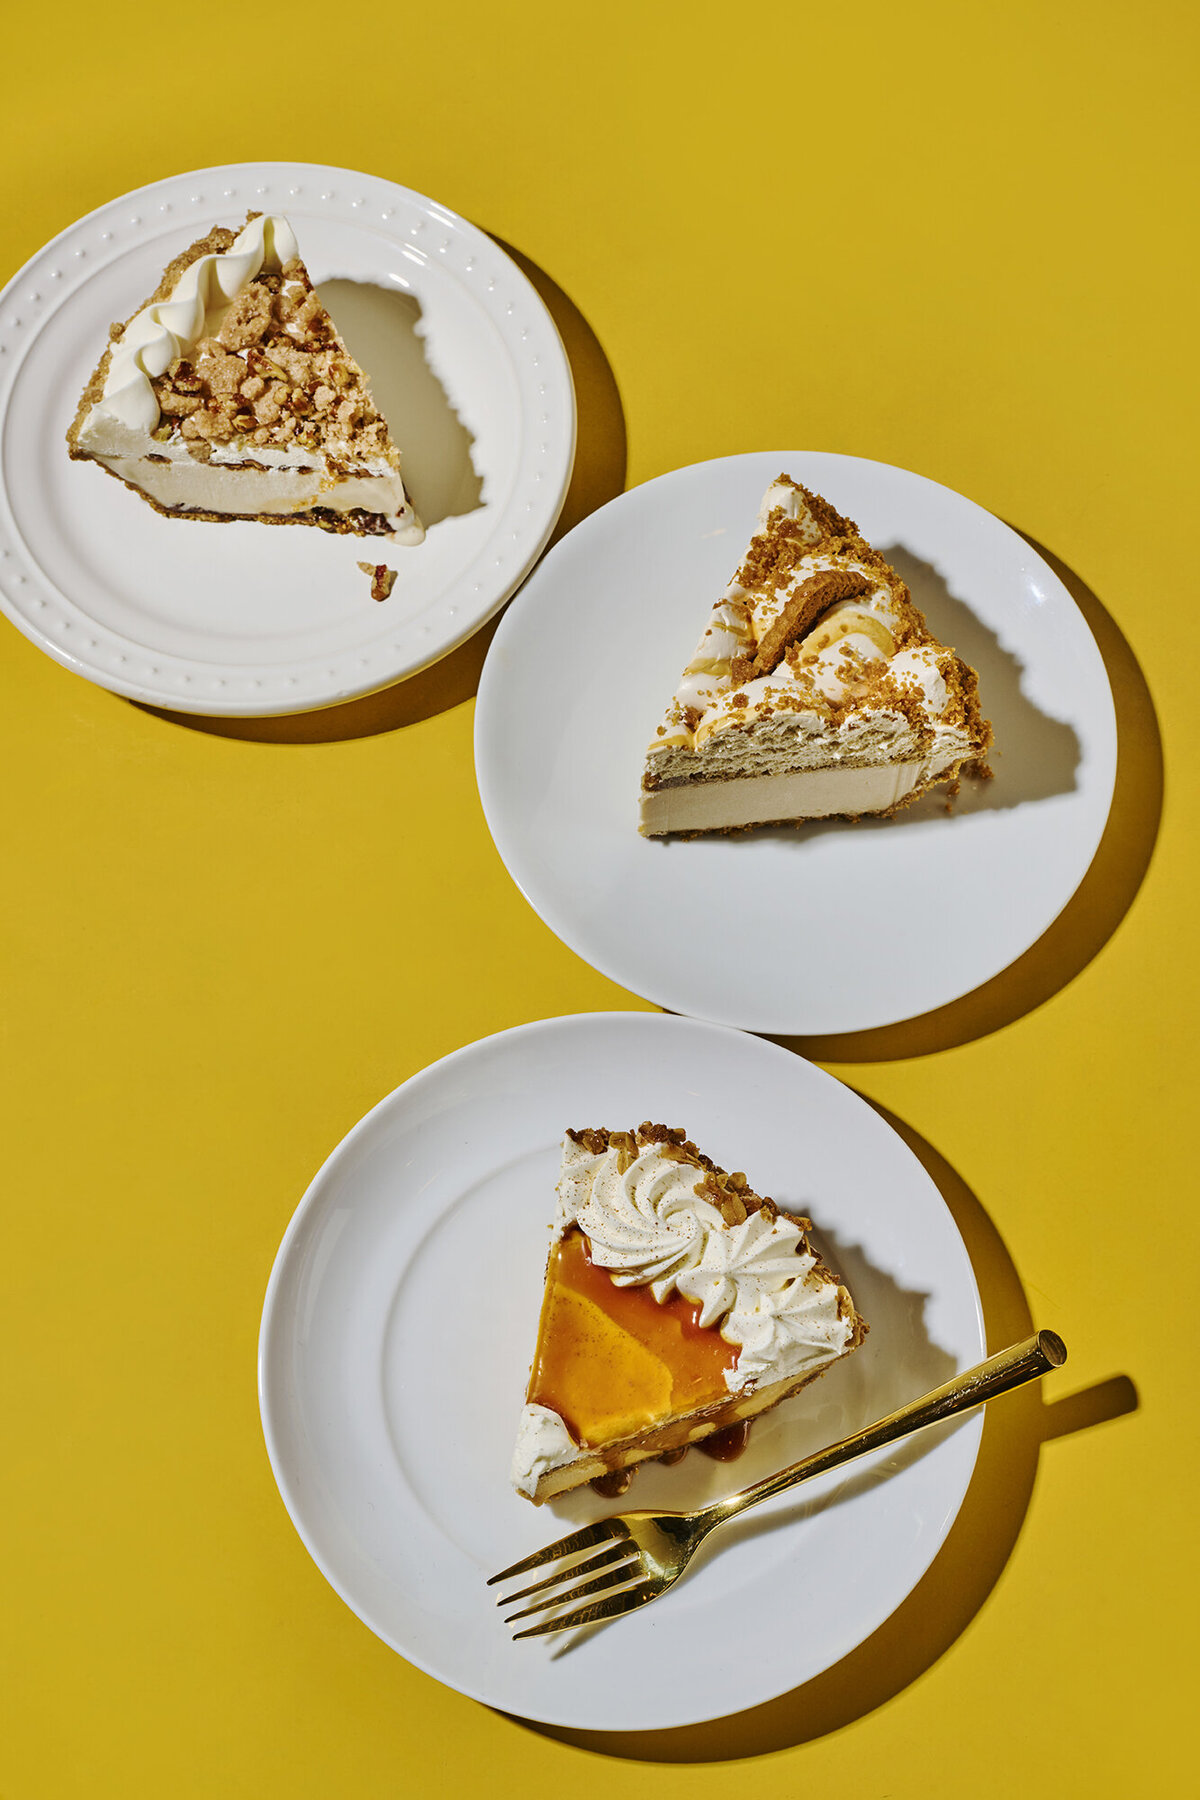 slices of pie on plates